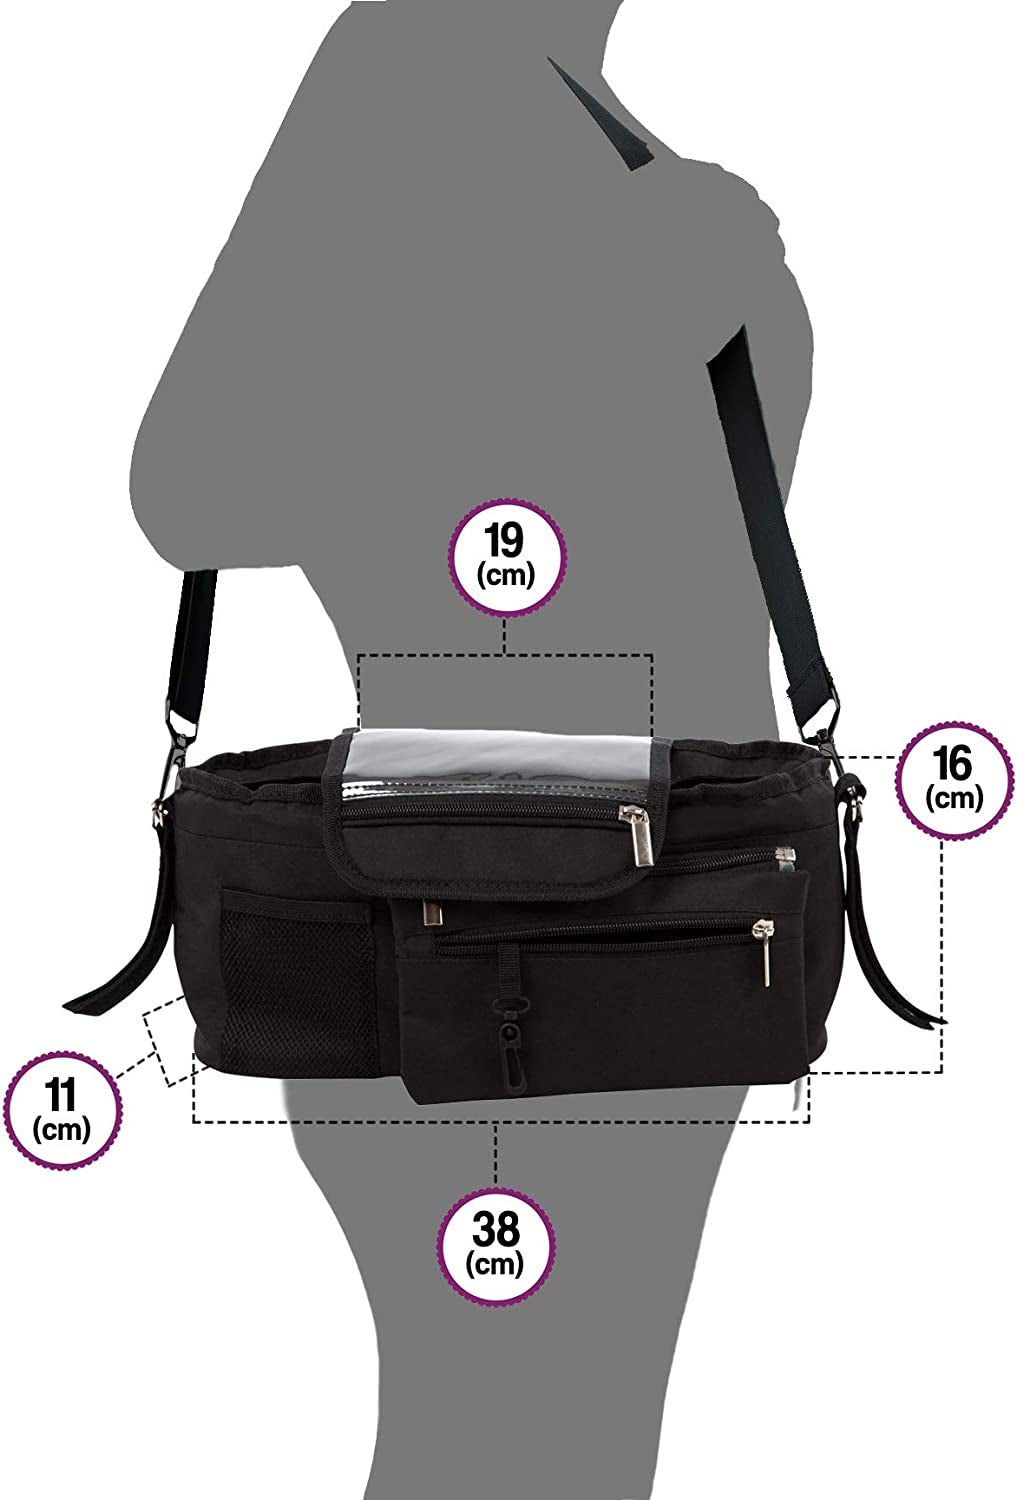 BTR Buggy Organiser Pram Organiser Bag with Detachable Purse & Mobile Phone Holder. Plus Additional Pram Clips. Recyclable Packaging, Black